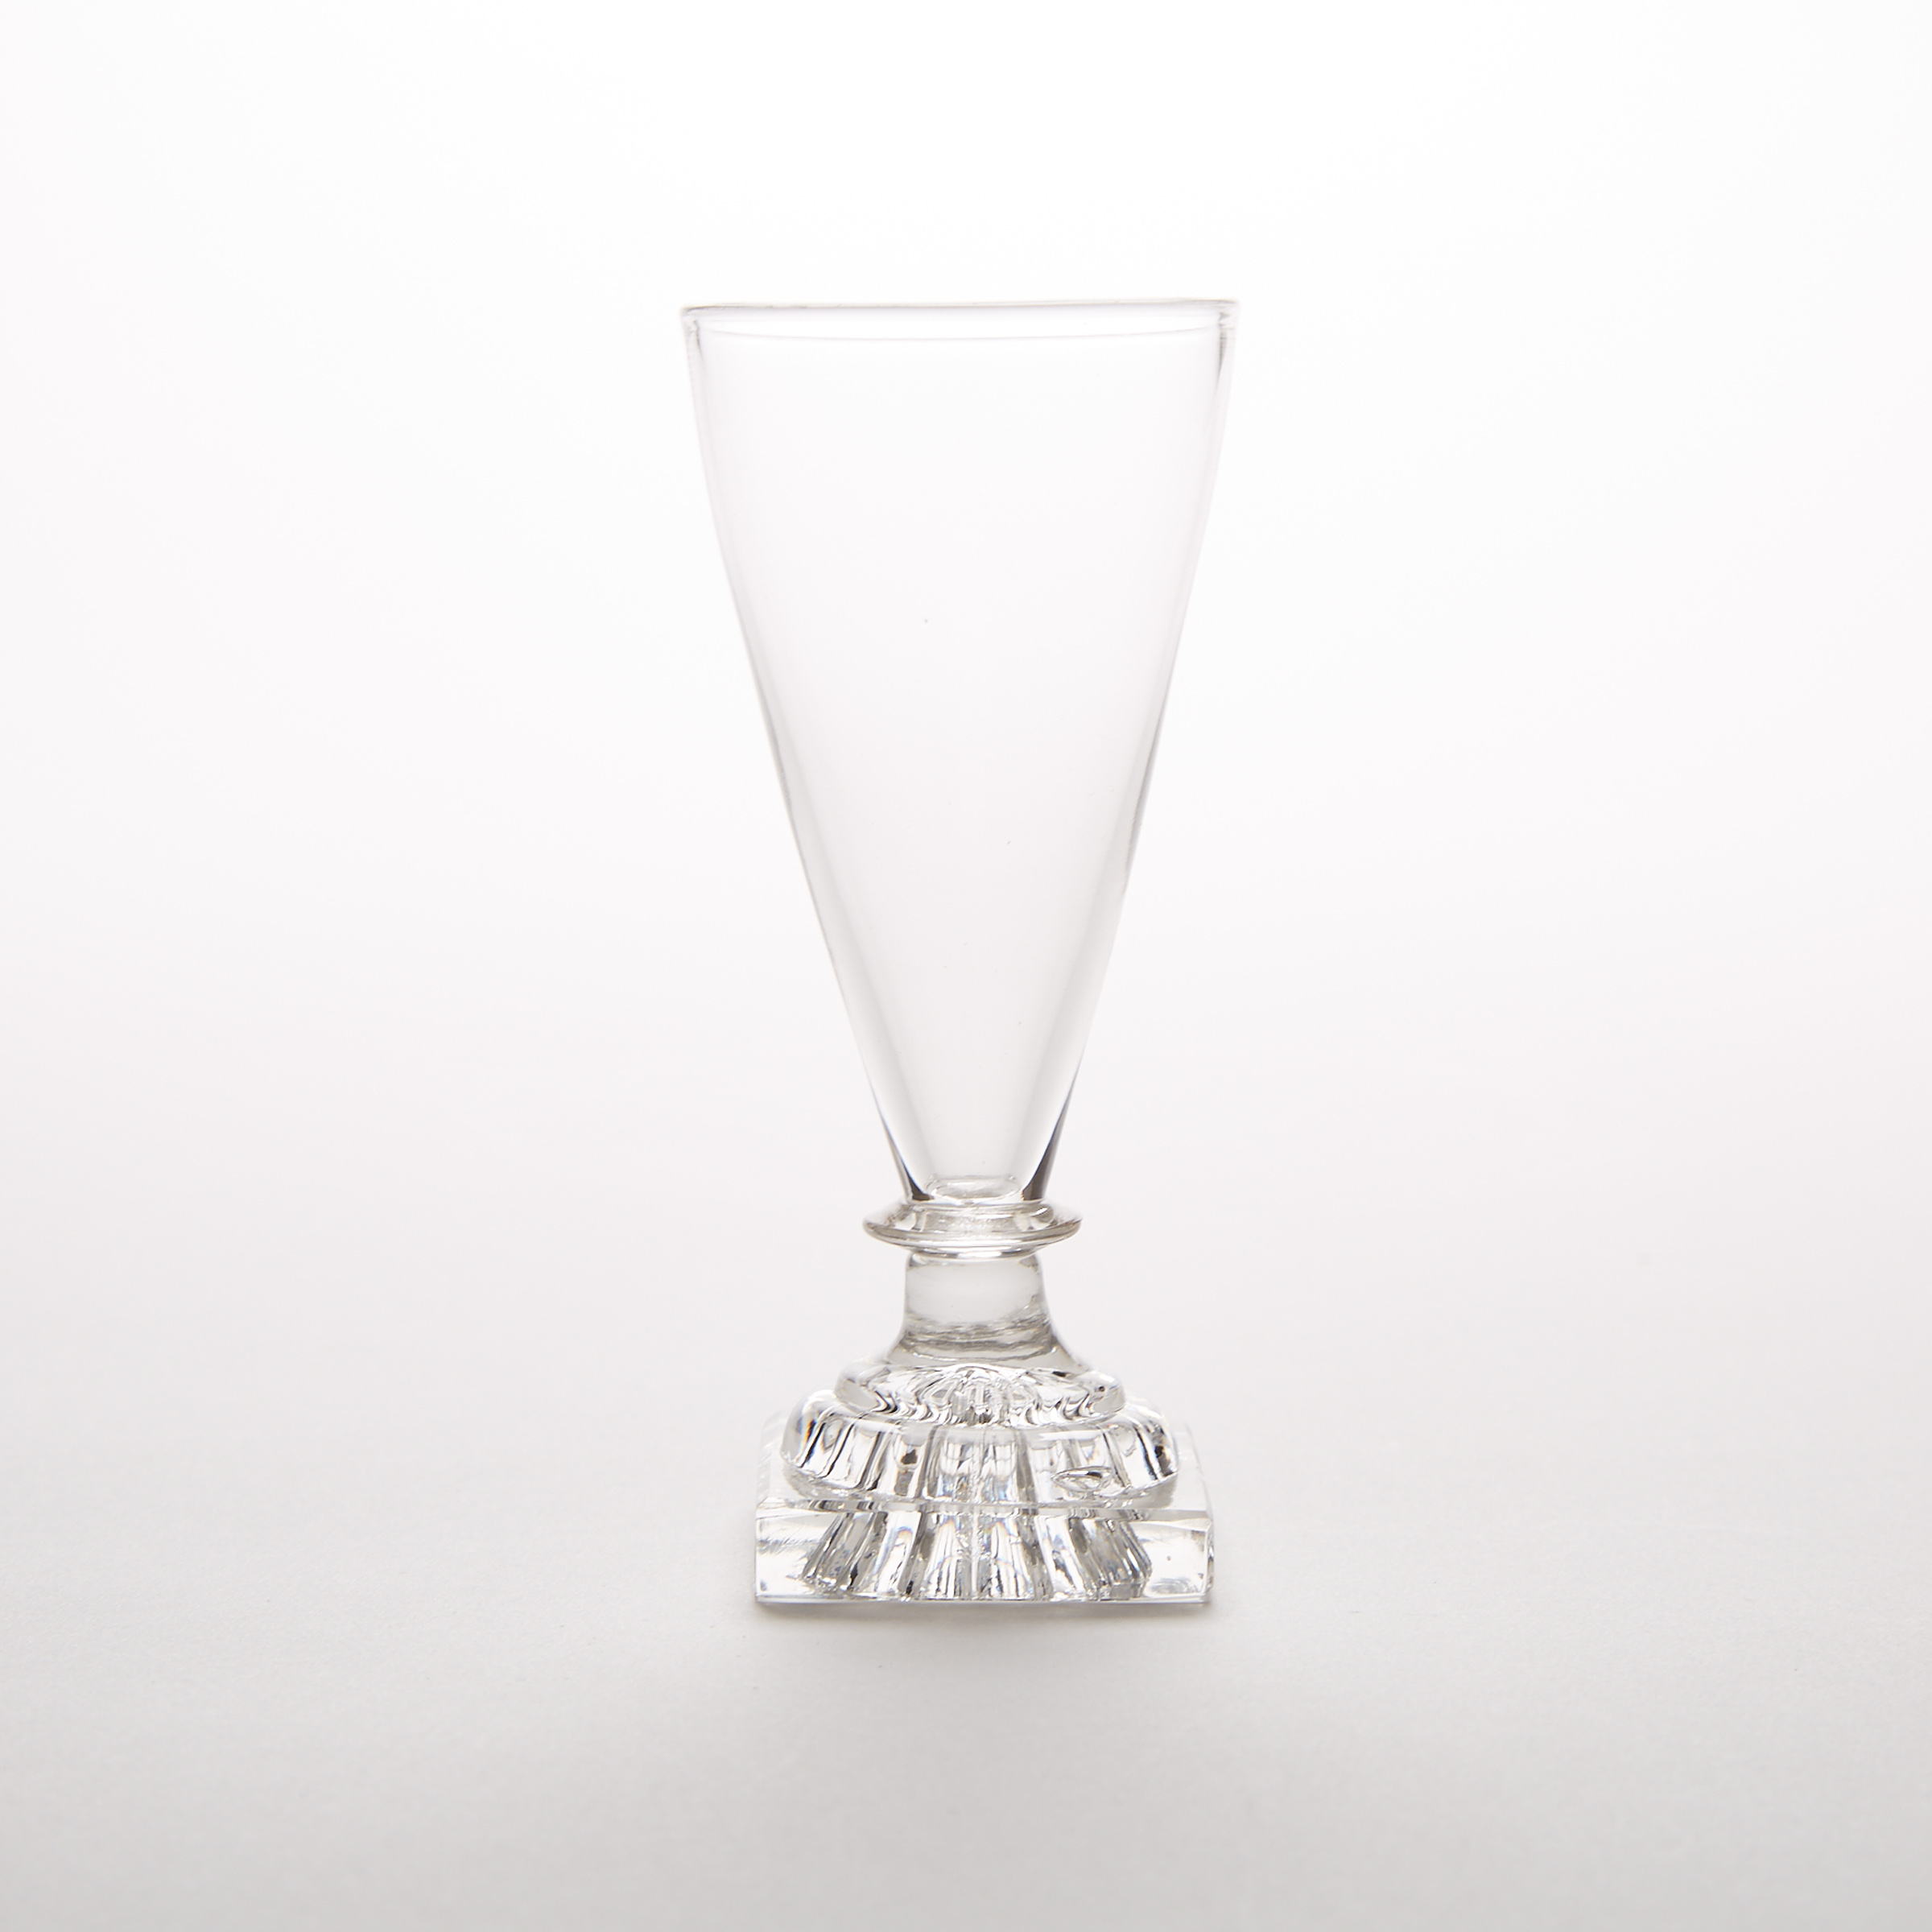 English Dwarf Ale Glass, early 19th century